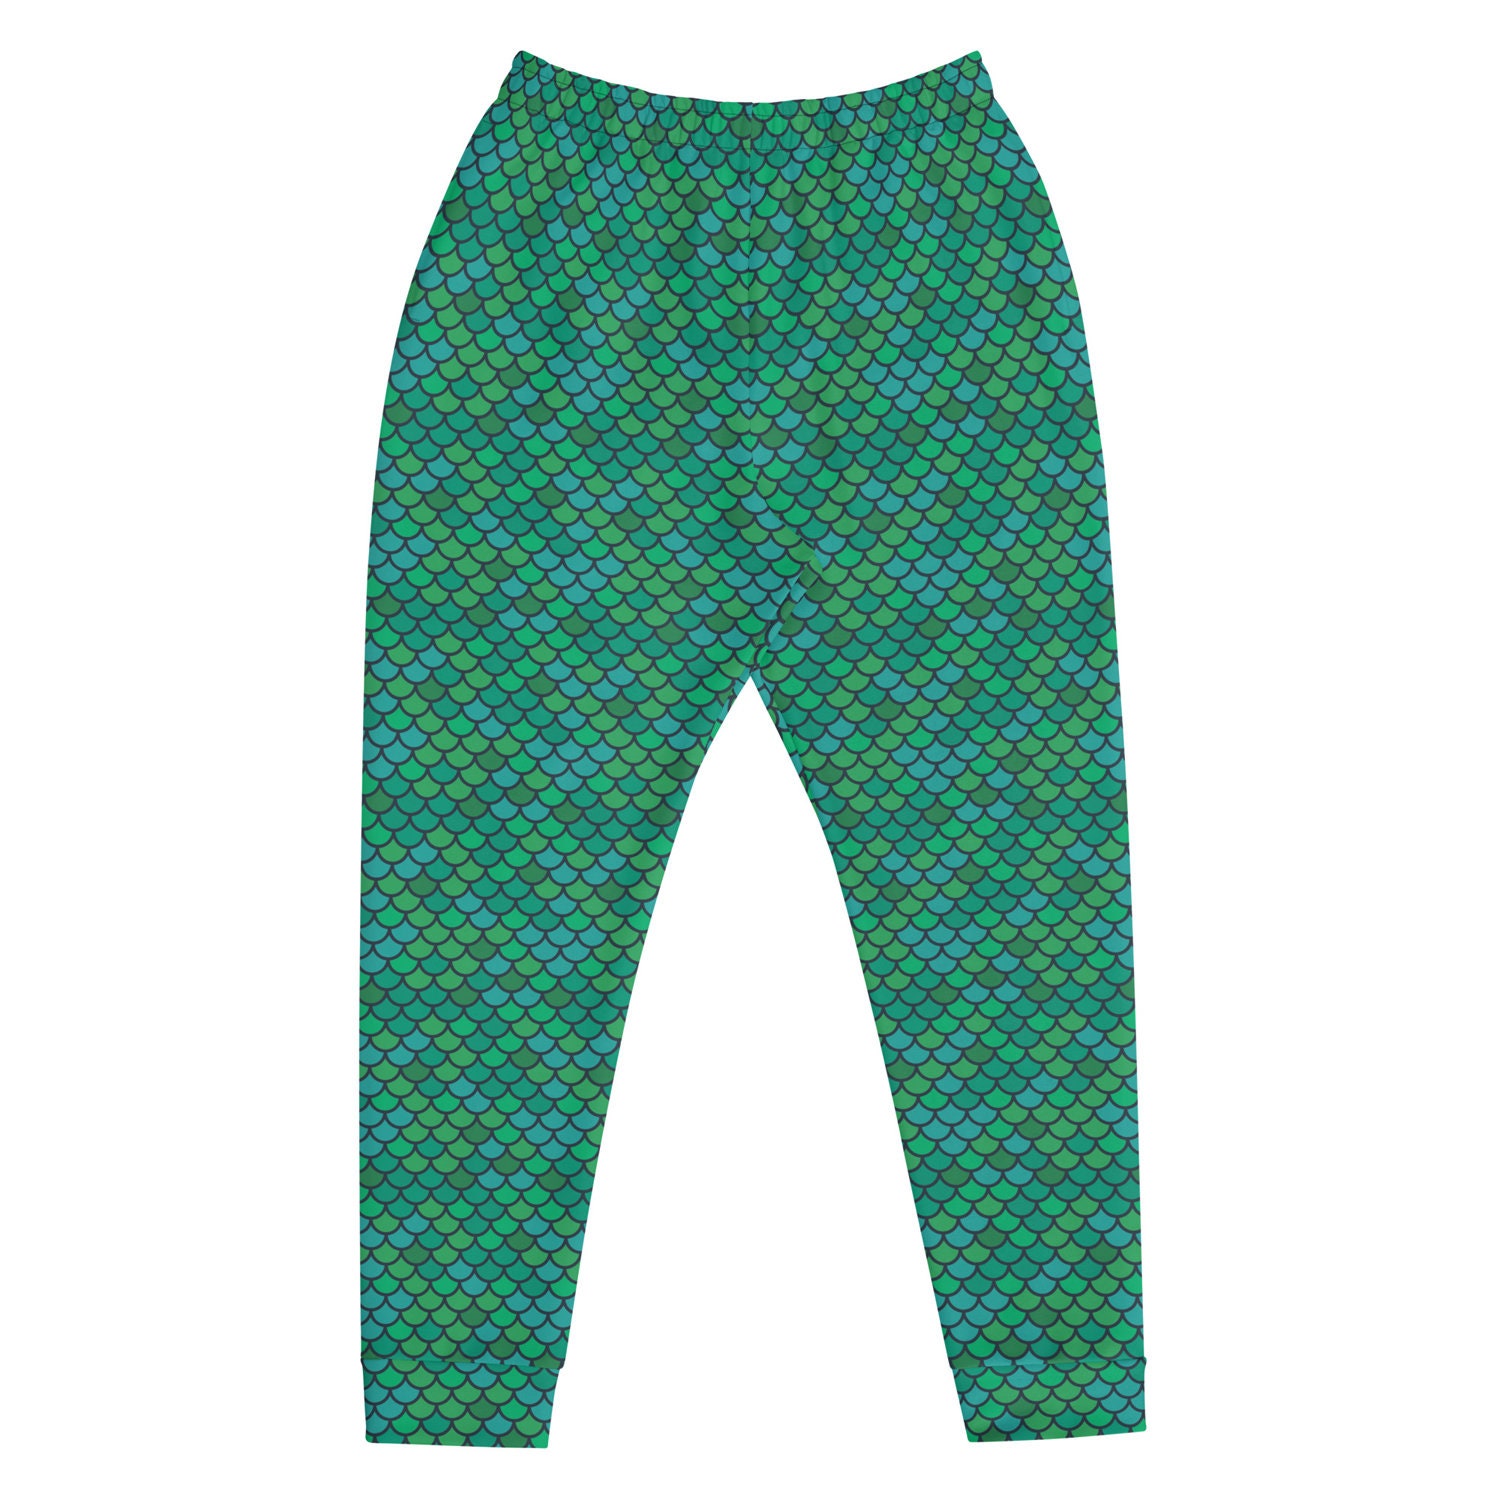 4 Pocket Green Merman Flare Pants - Holographic Metallic Green